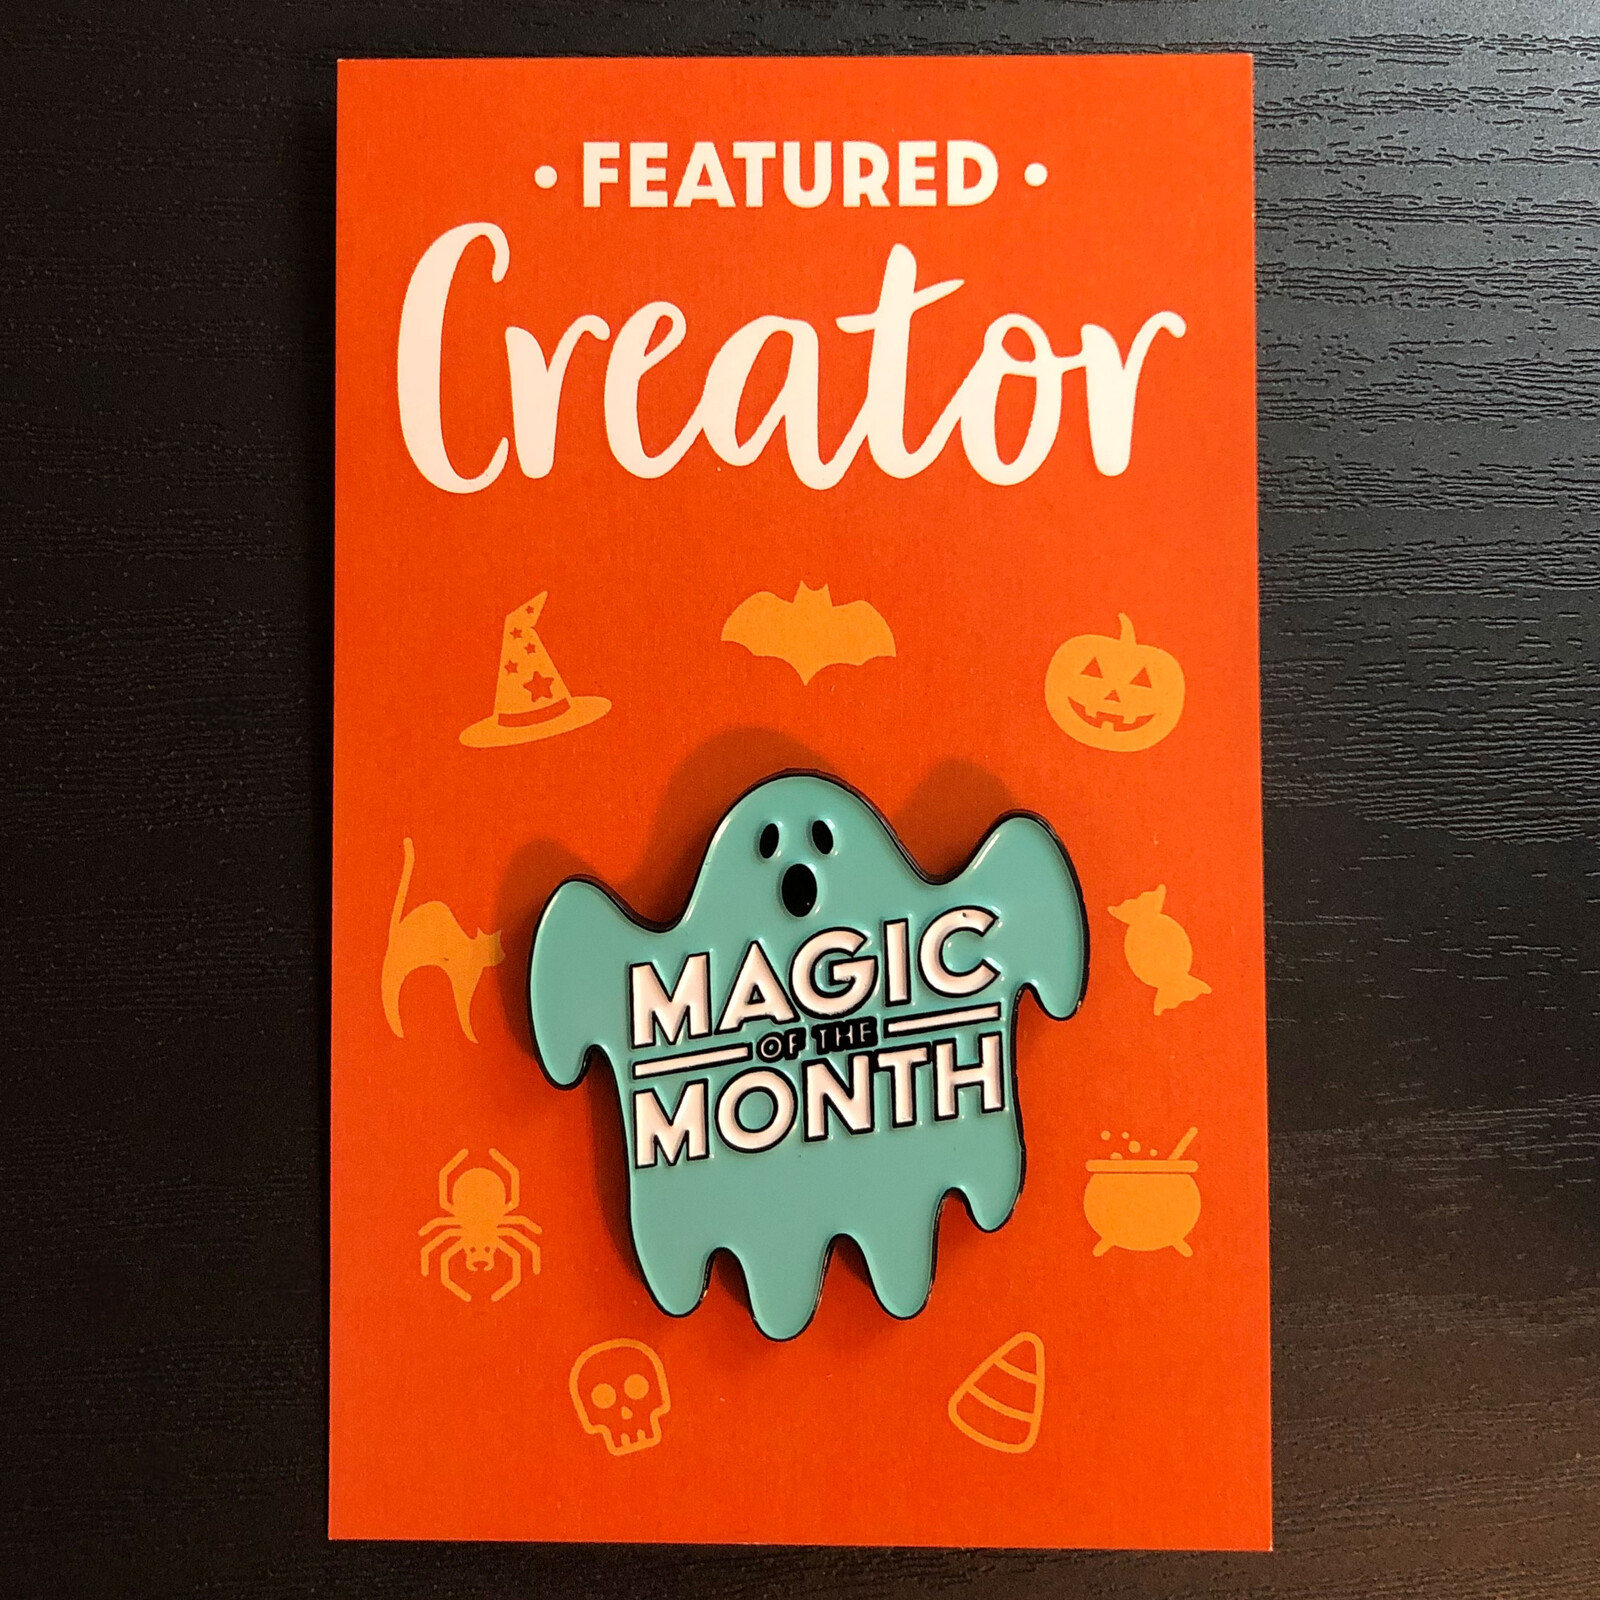 "Halloween" themed pin